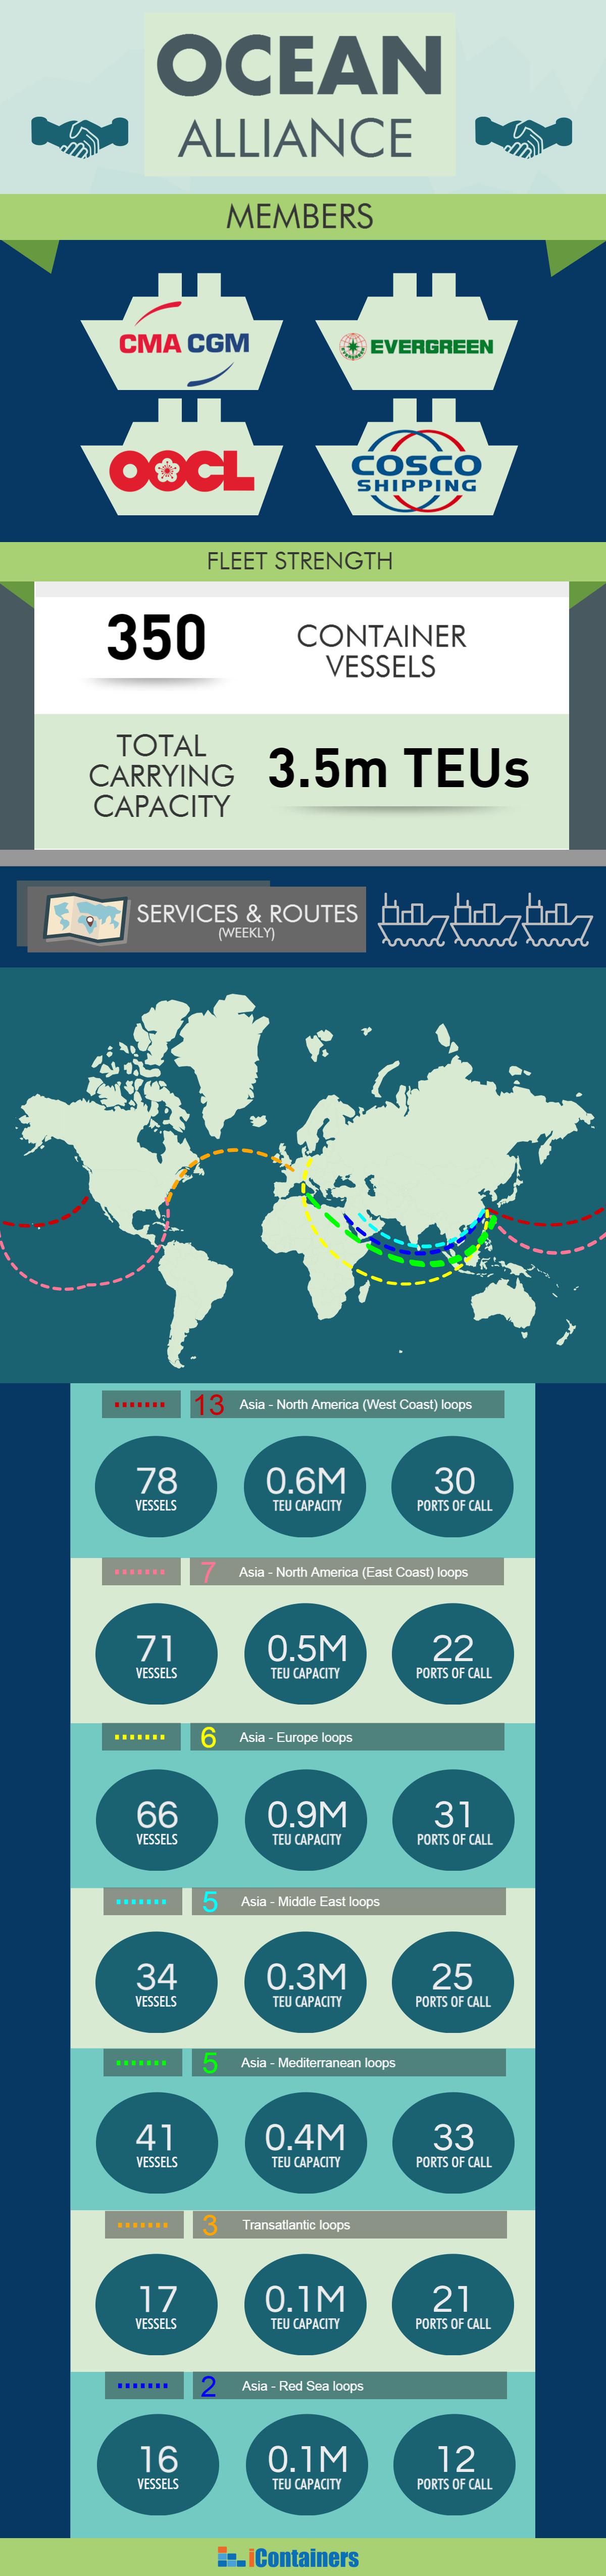 ocean alliance infographic